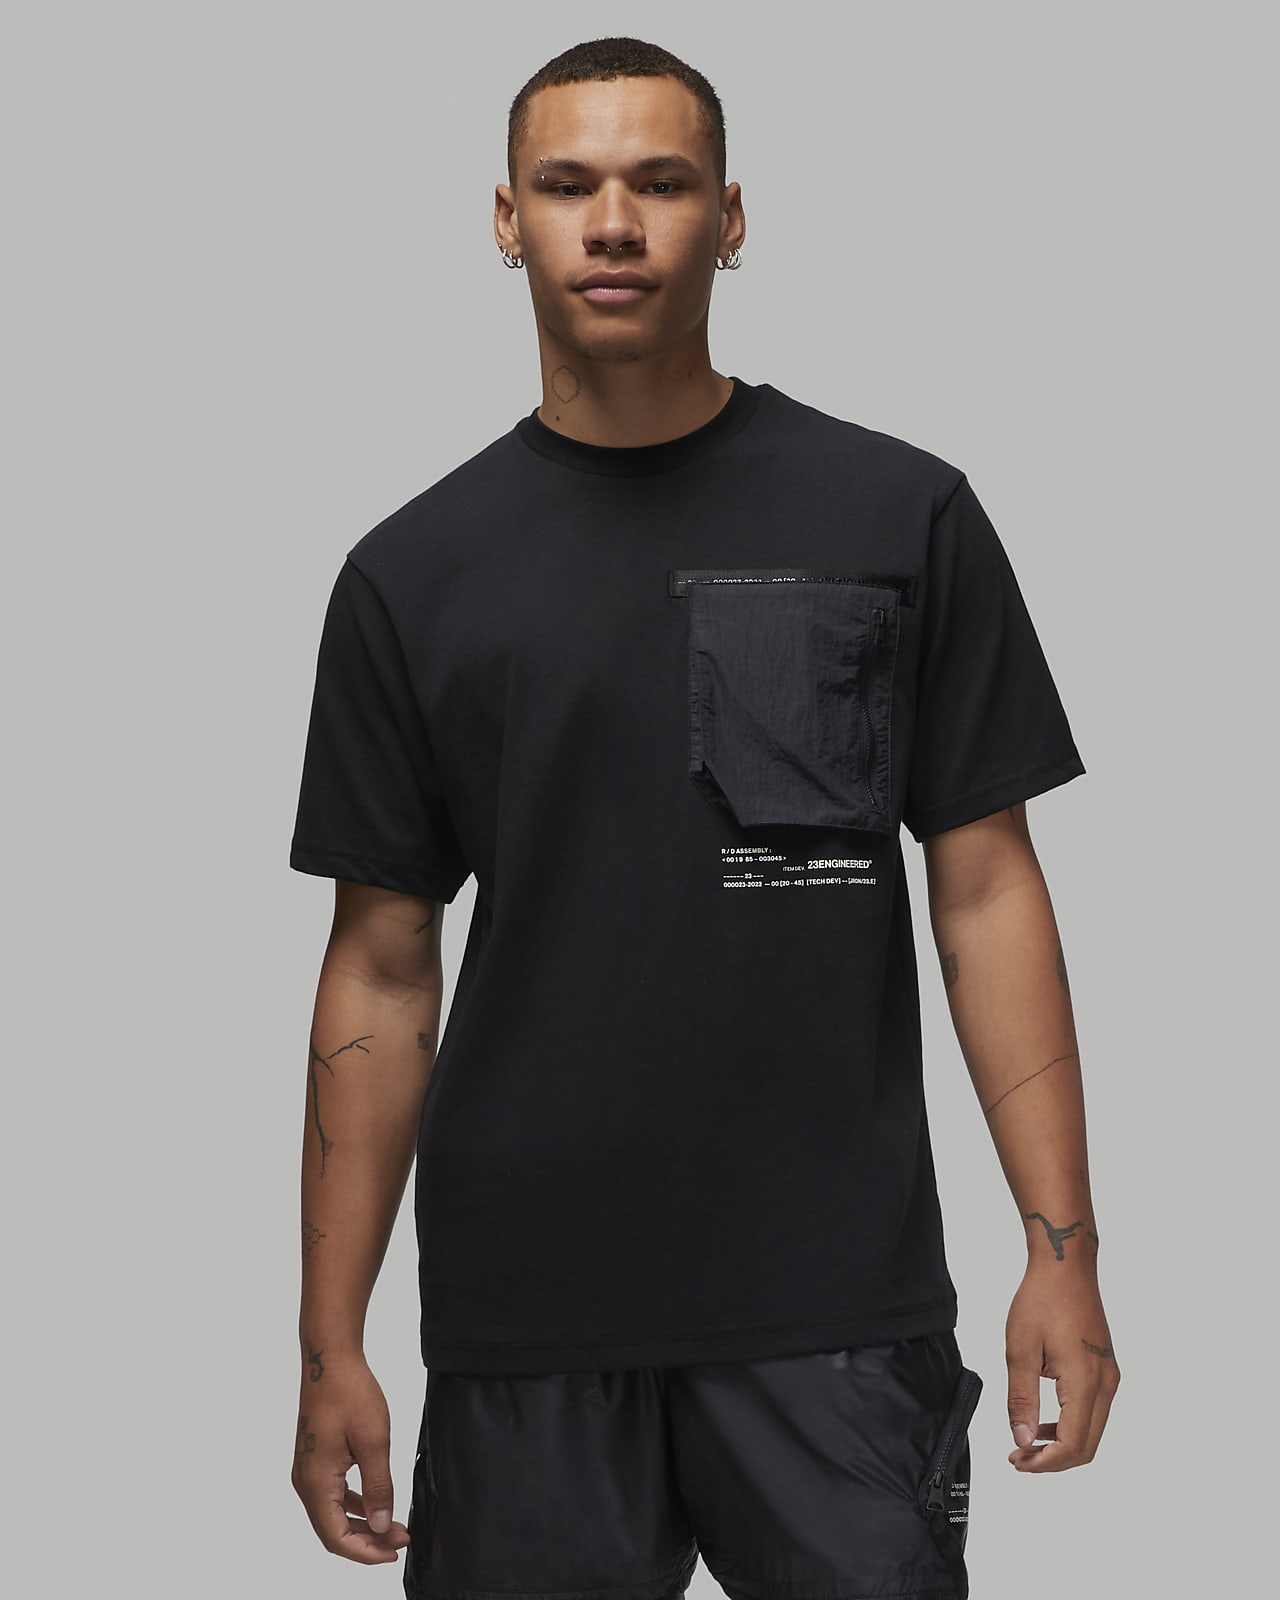 Jordan 23 Engineered Men's Statement T-Shirt